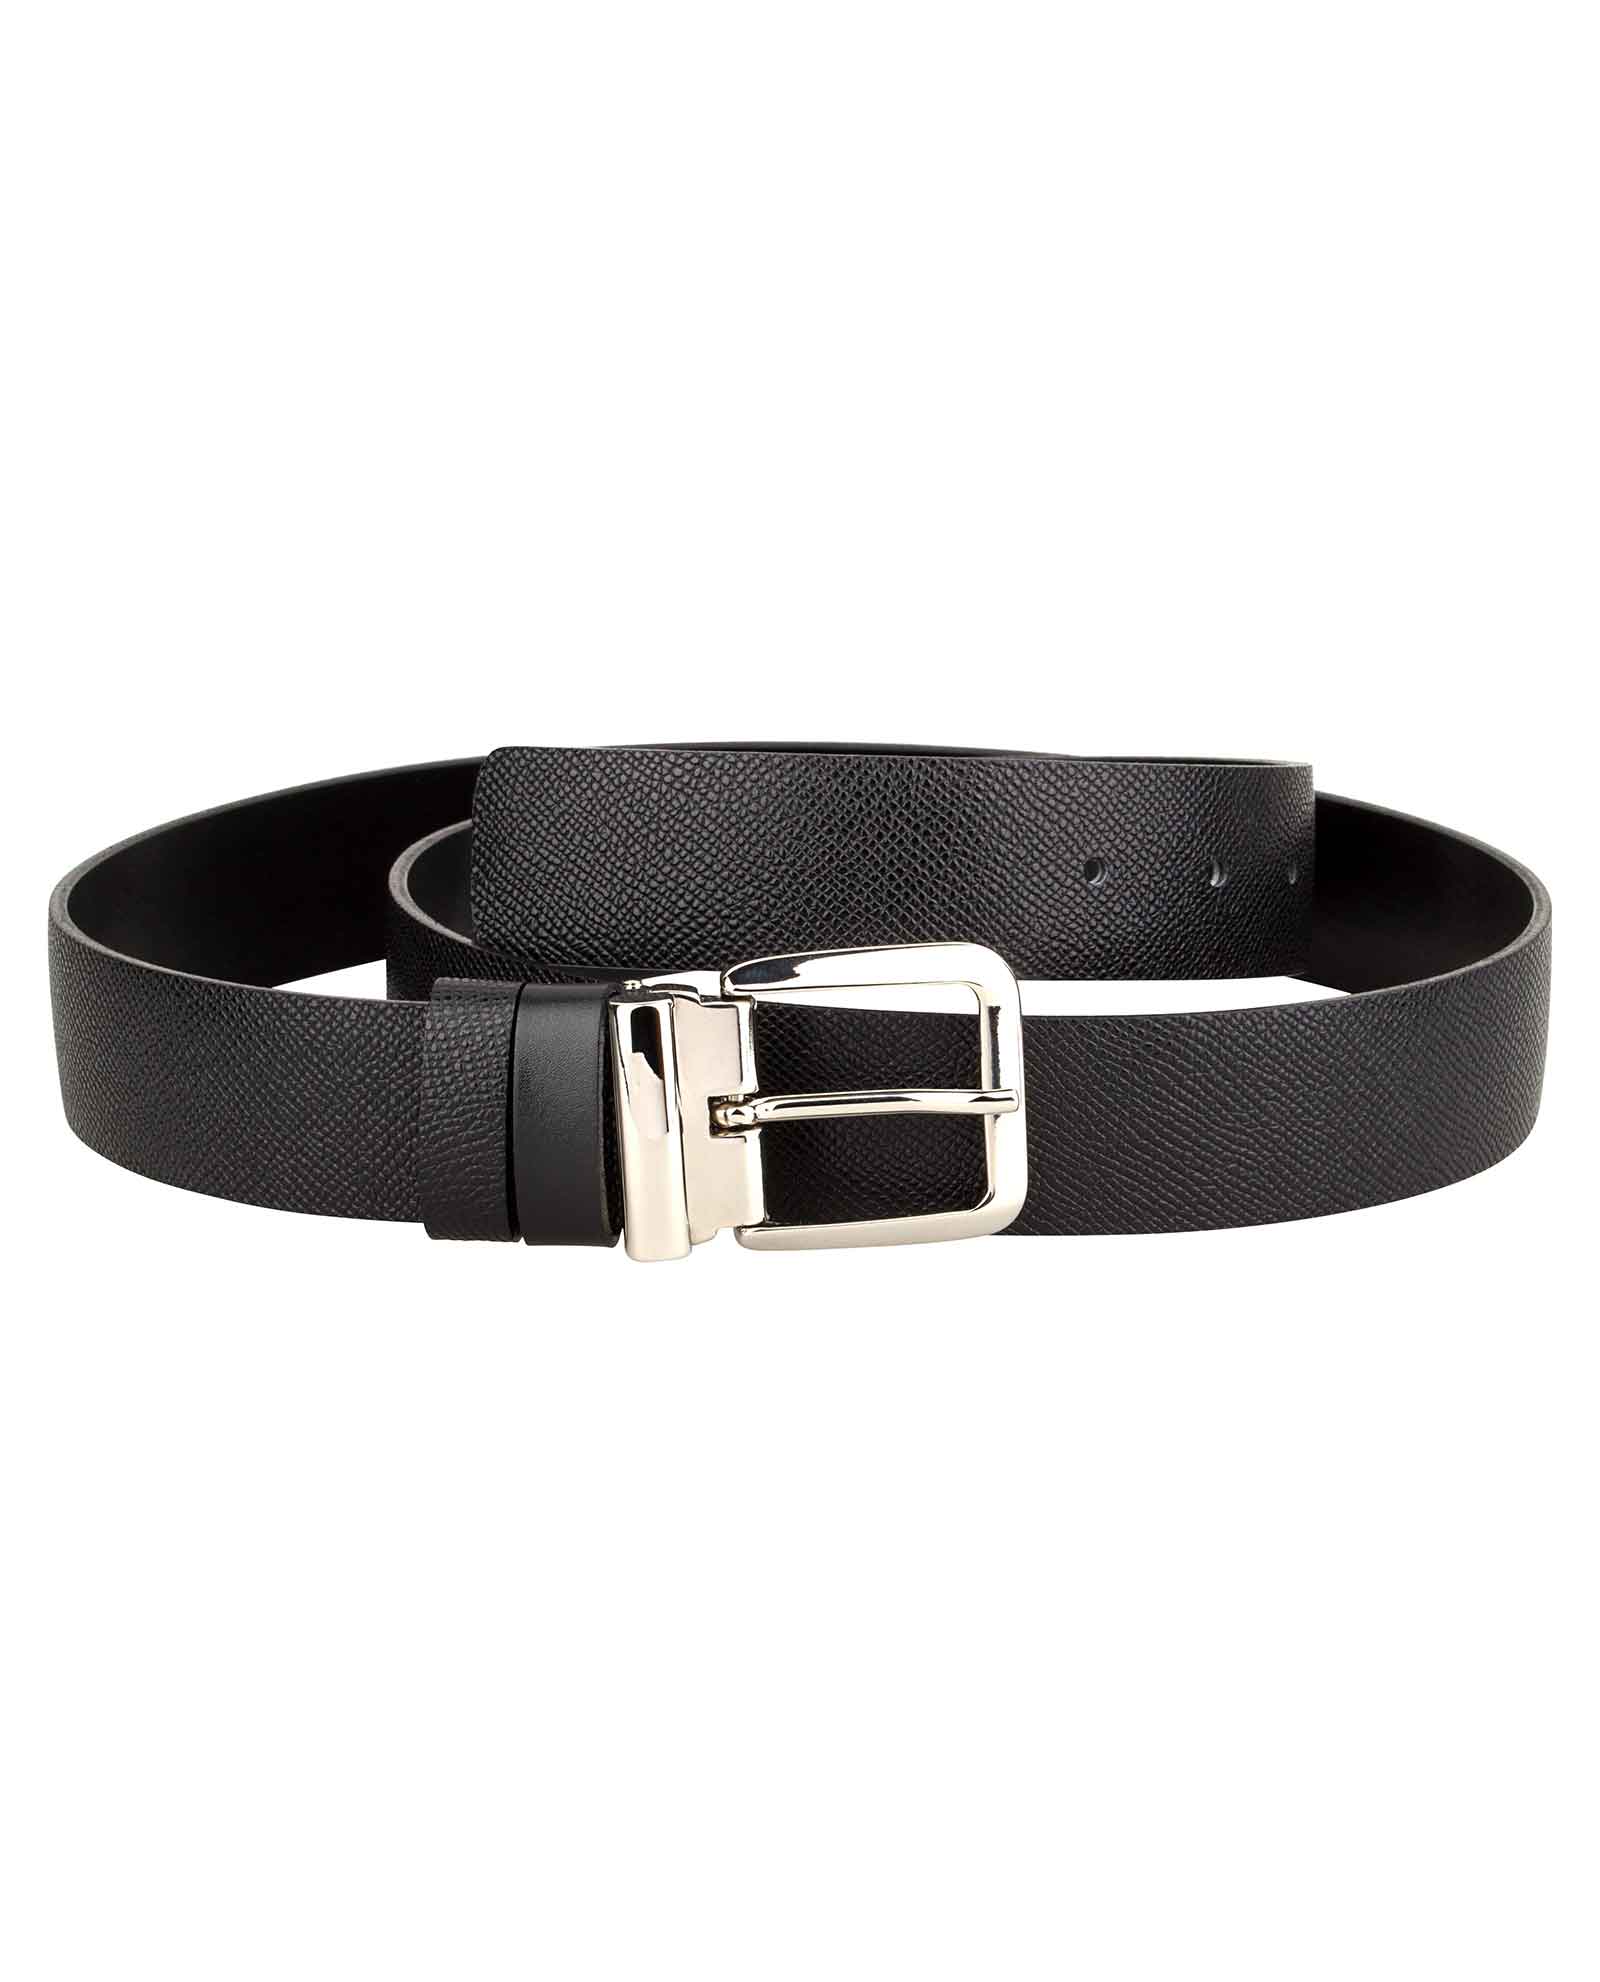 Buy Men's Black Reversible Leather Belt - Capo Pelle - Free Shipping!